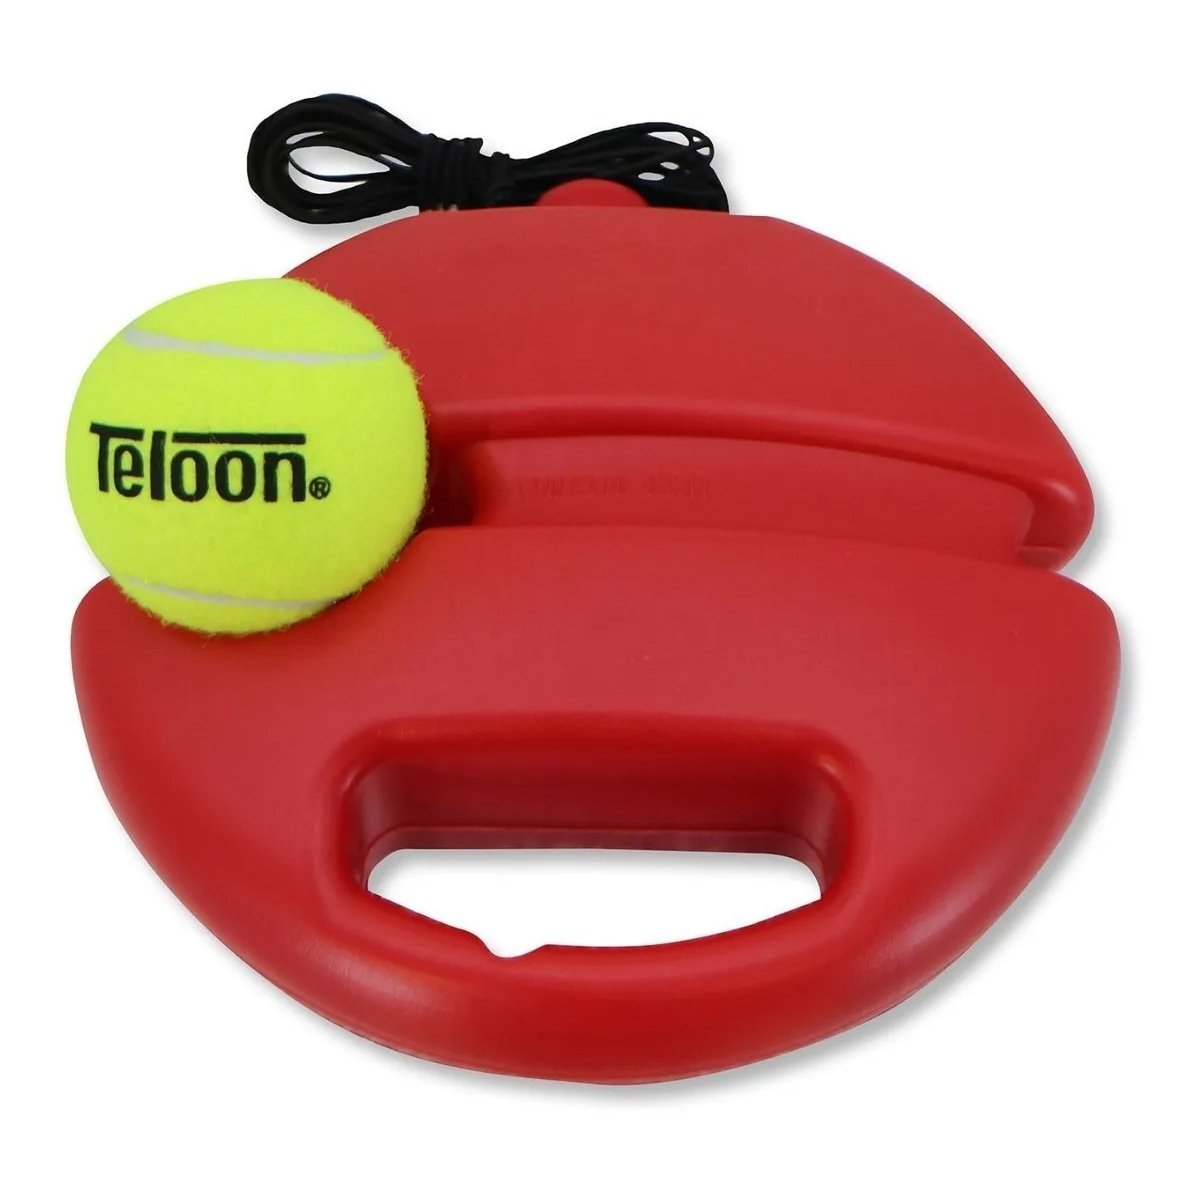 Bola De Tênis com Elástico Treinamento 4m Base Pvc- Teloon